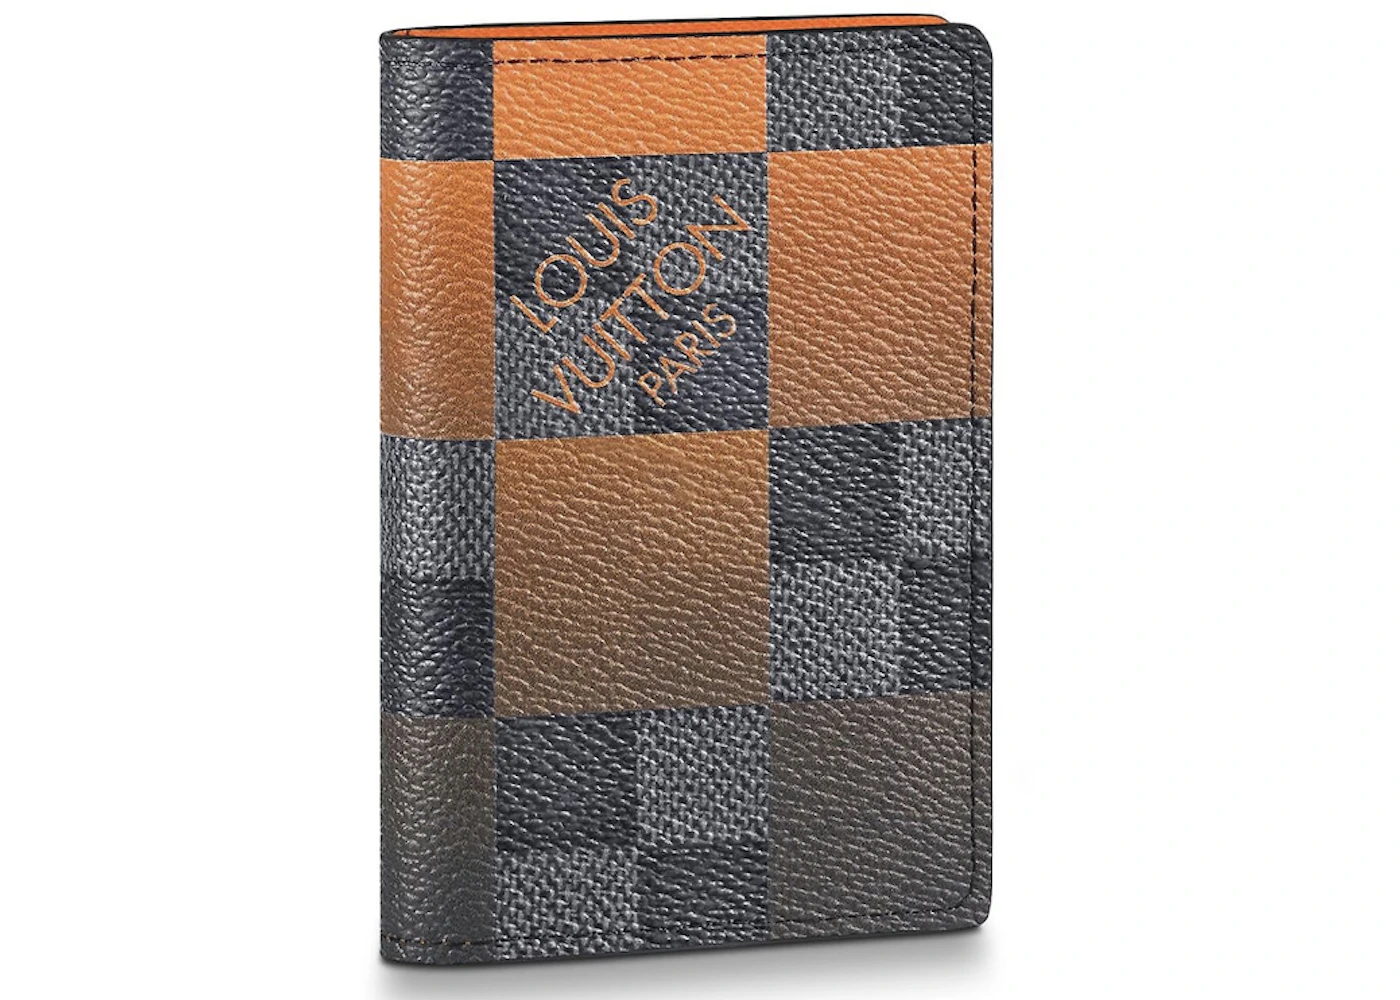 LOUIS VUITTON Damier Graphite Giant Pocket Organizer Wallet Orange